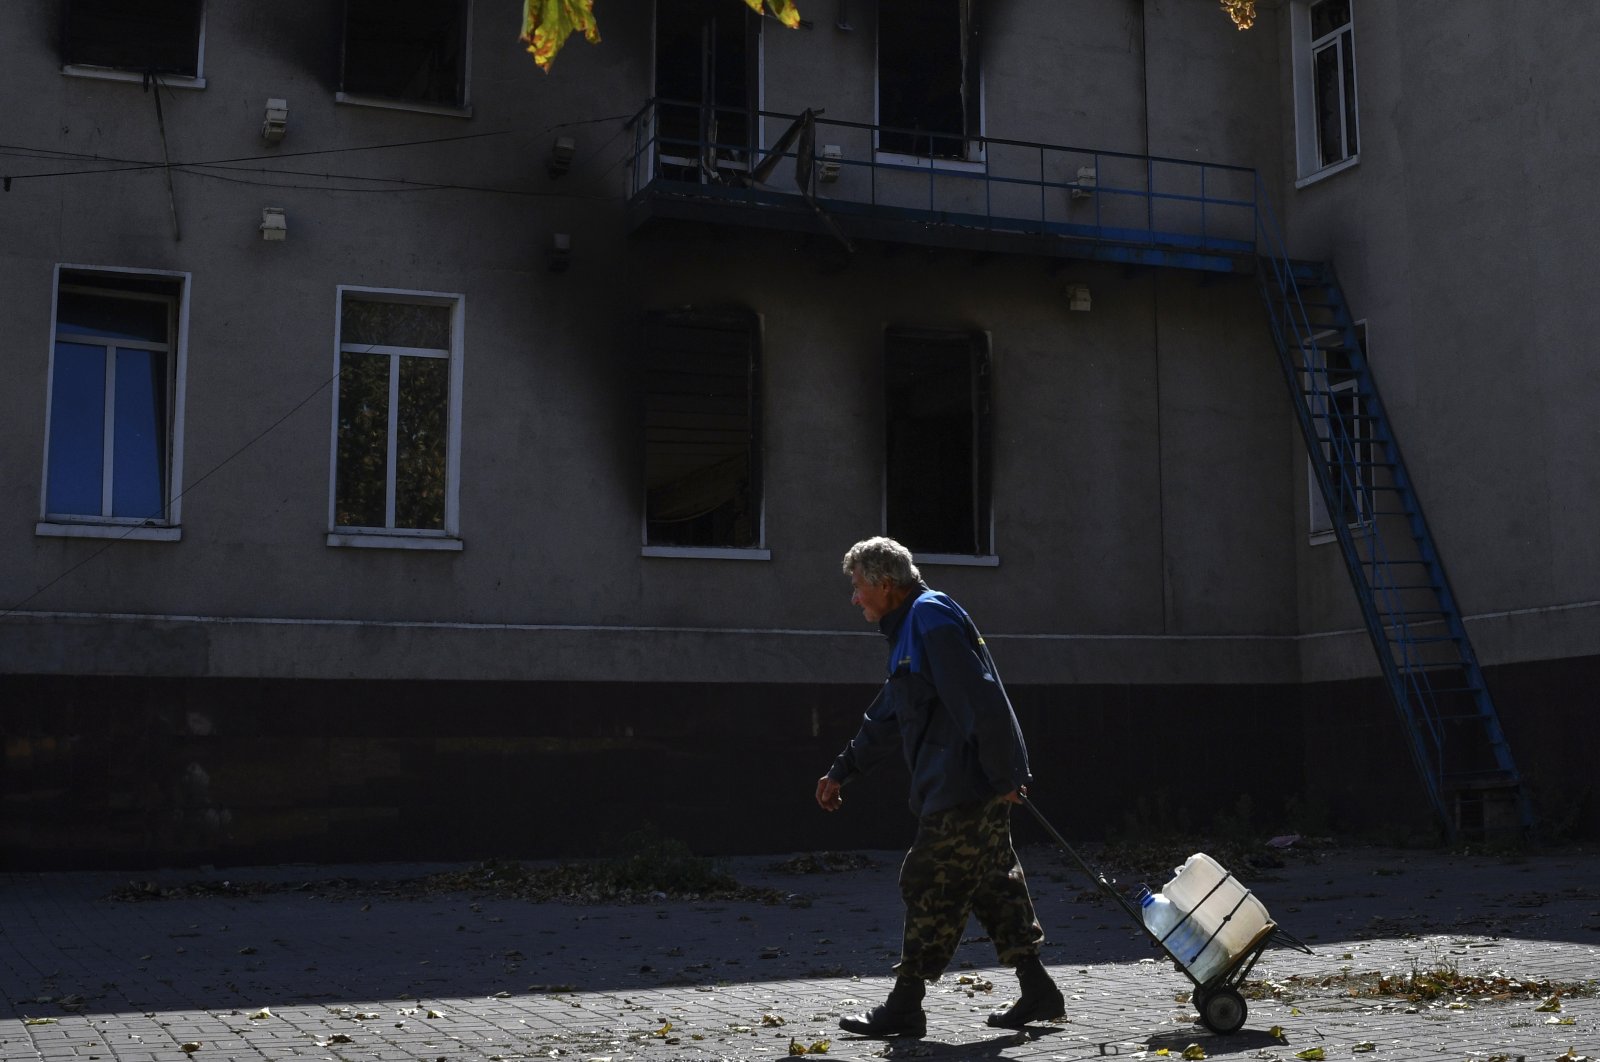 A man walks past a destroyed building after recent shelling in Bakhmut, Ukraine, Sept. 22, 2022. (AP Photo)